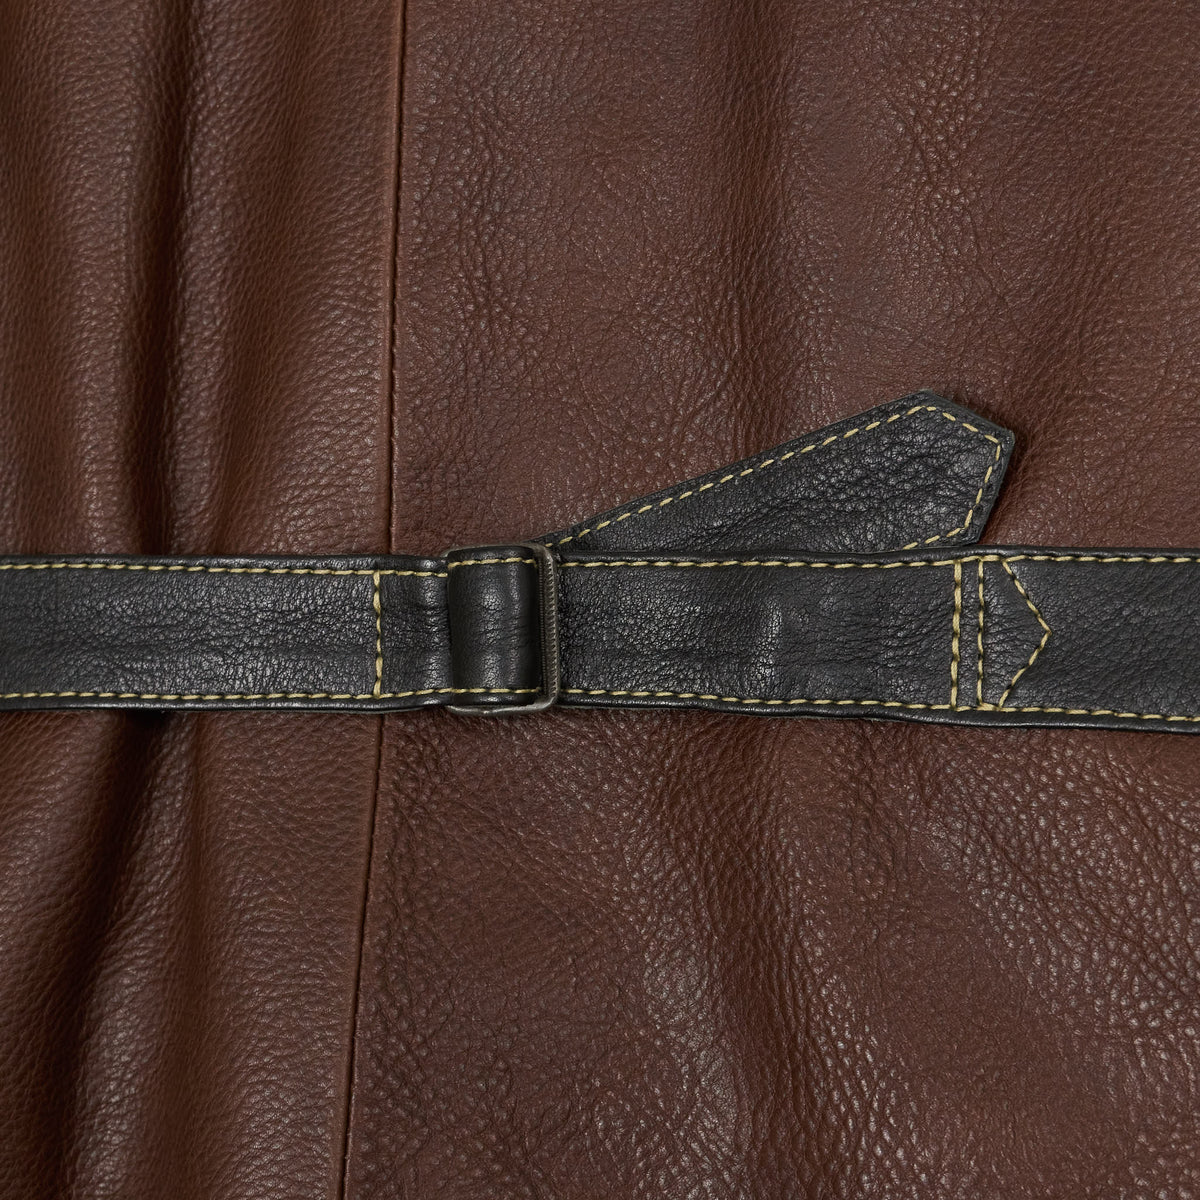 Tenjin Works Craftman Leather Vest